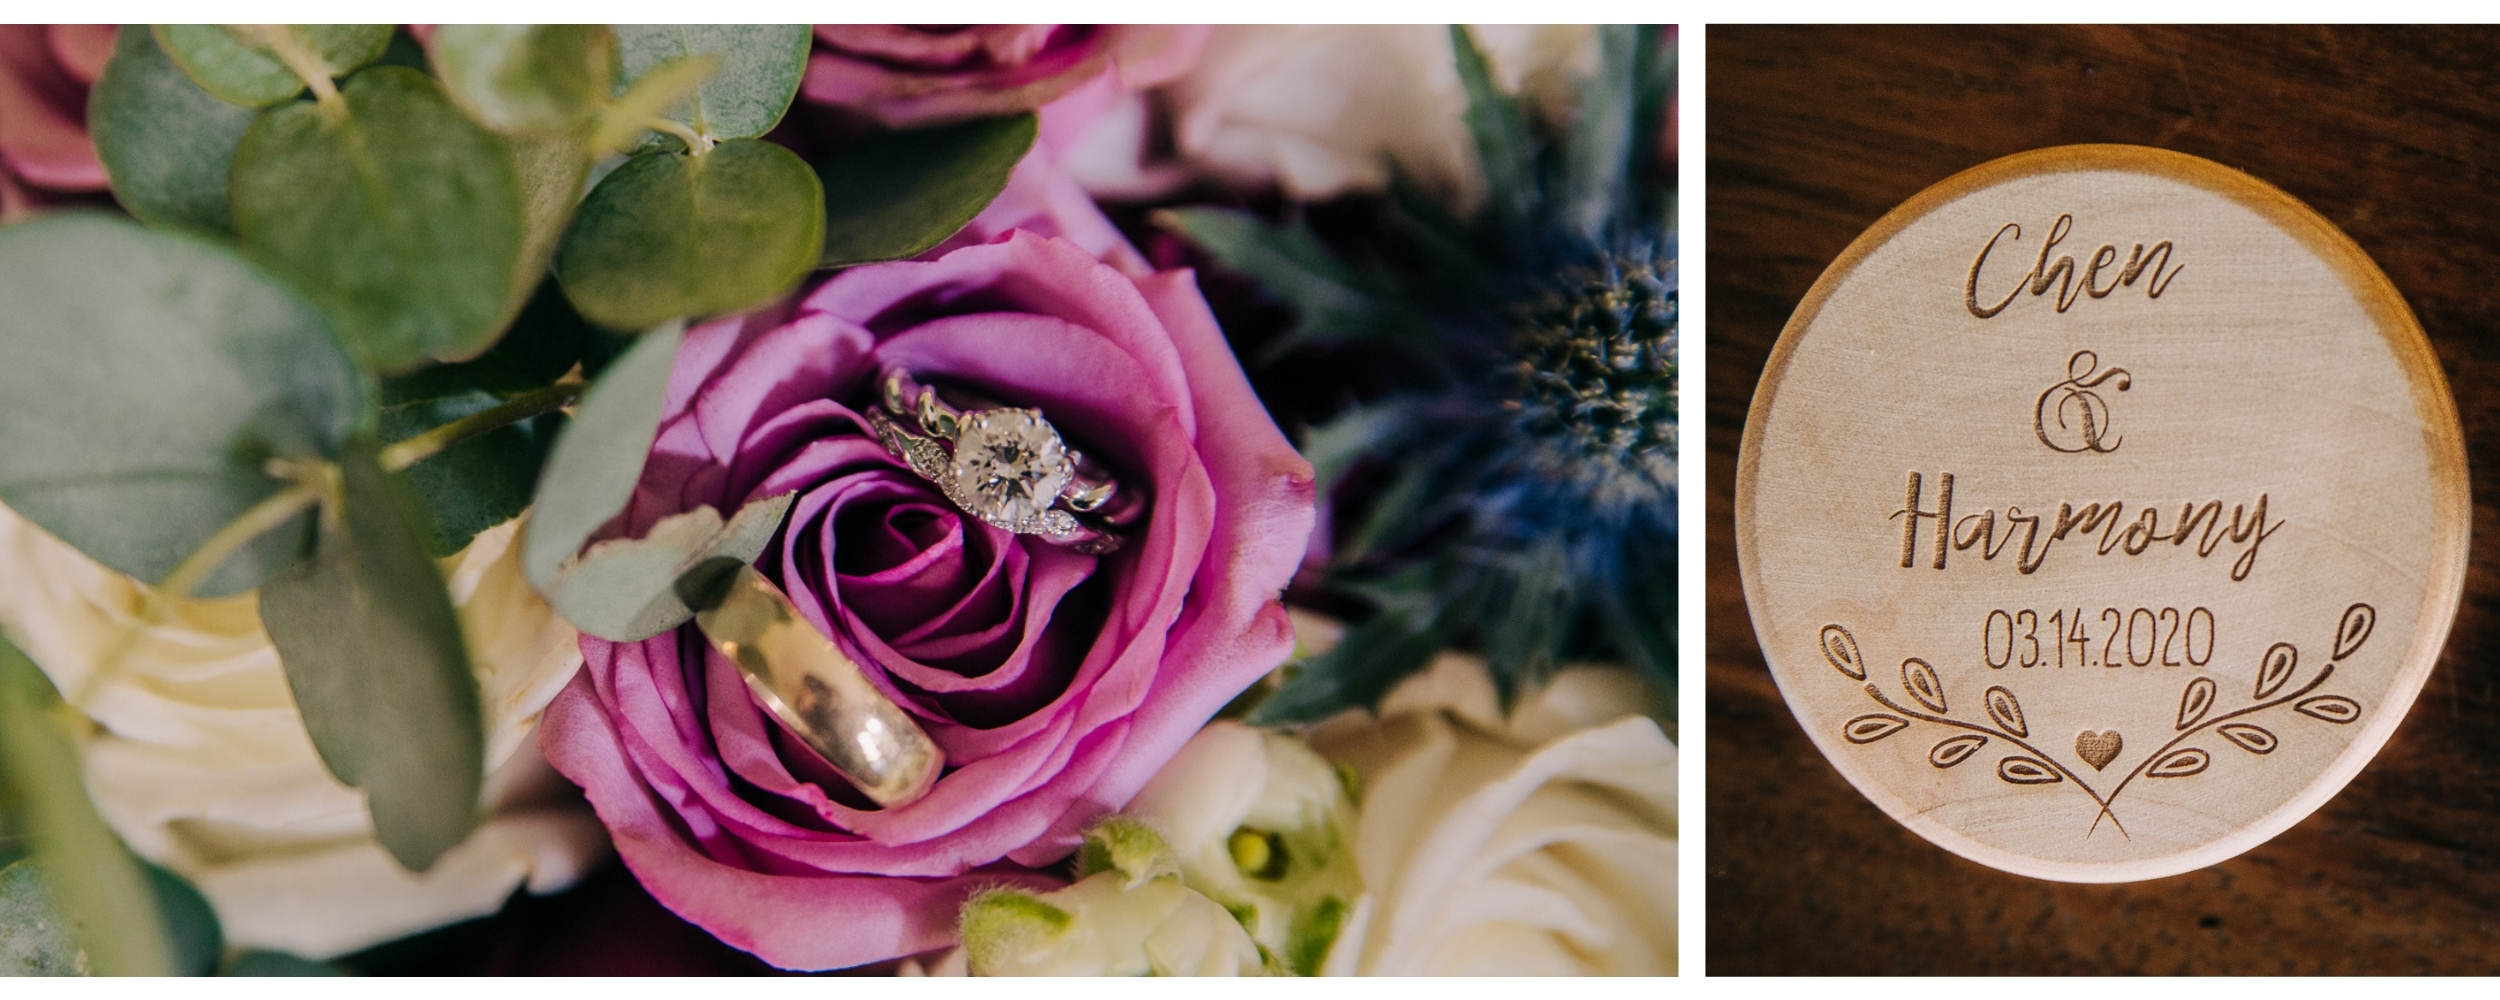 tucson-wedding-photographer---detail-shots---detail-photos---wedding-detail-shots---wedding-detail-photos---custom-ring-box---wedding-bouquet---wedding-rings-in-bouquet